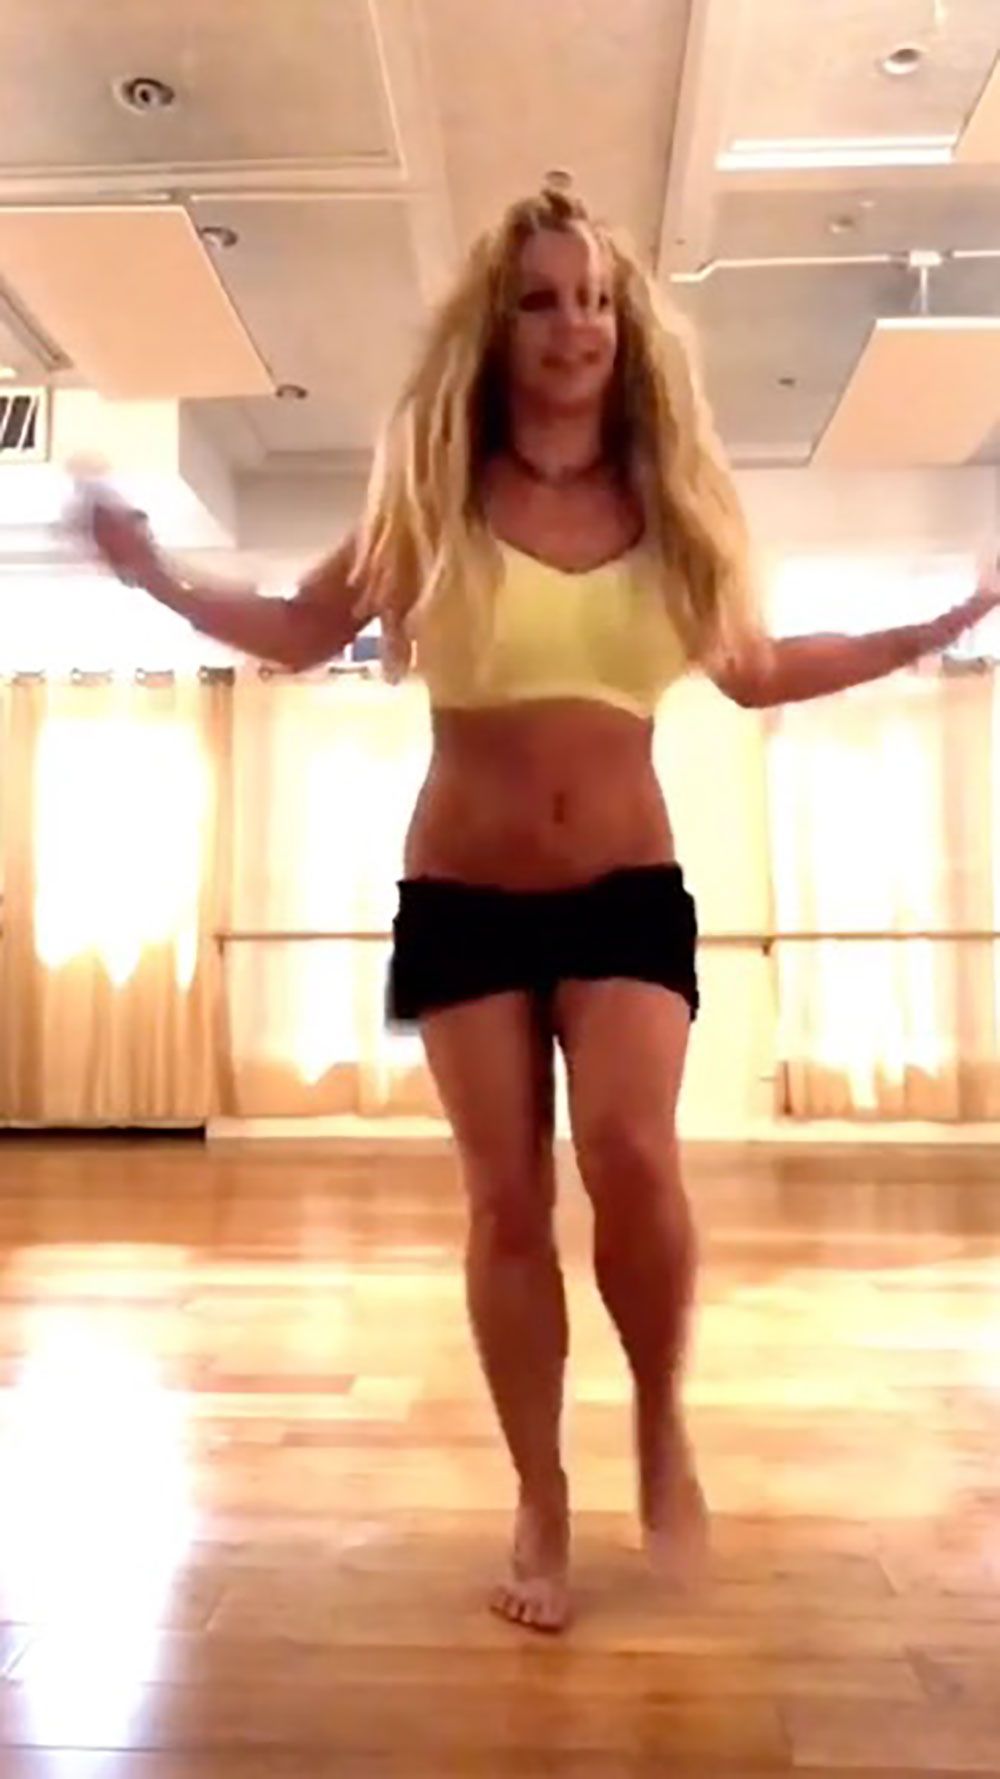 Britney Spears Breaks Foot In Dance Video Posted On Instagram